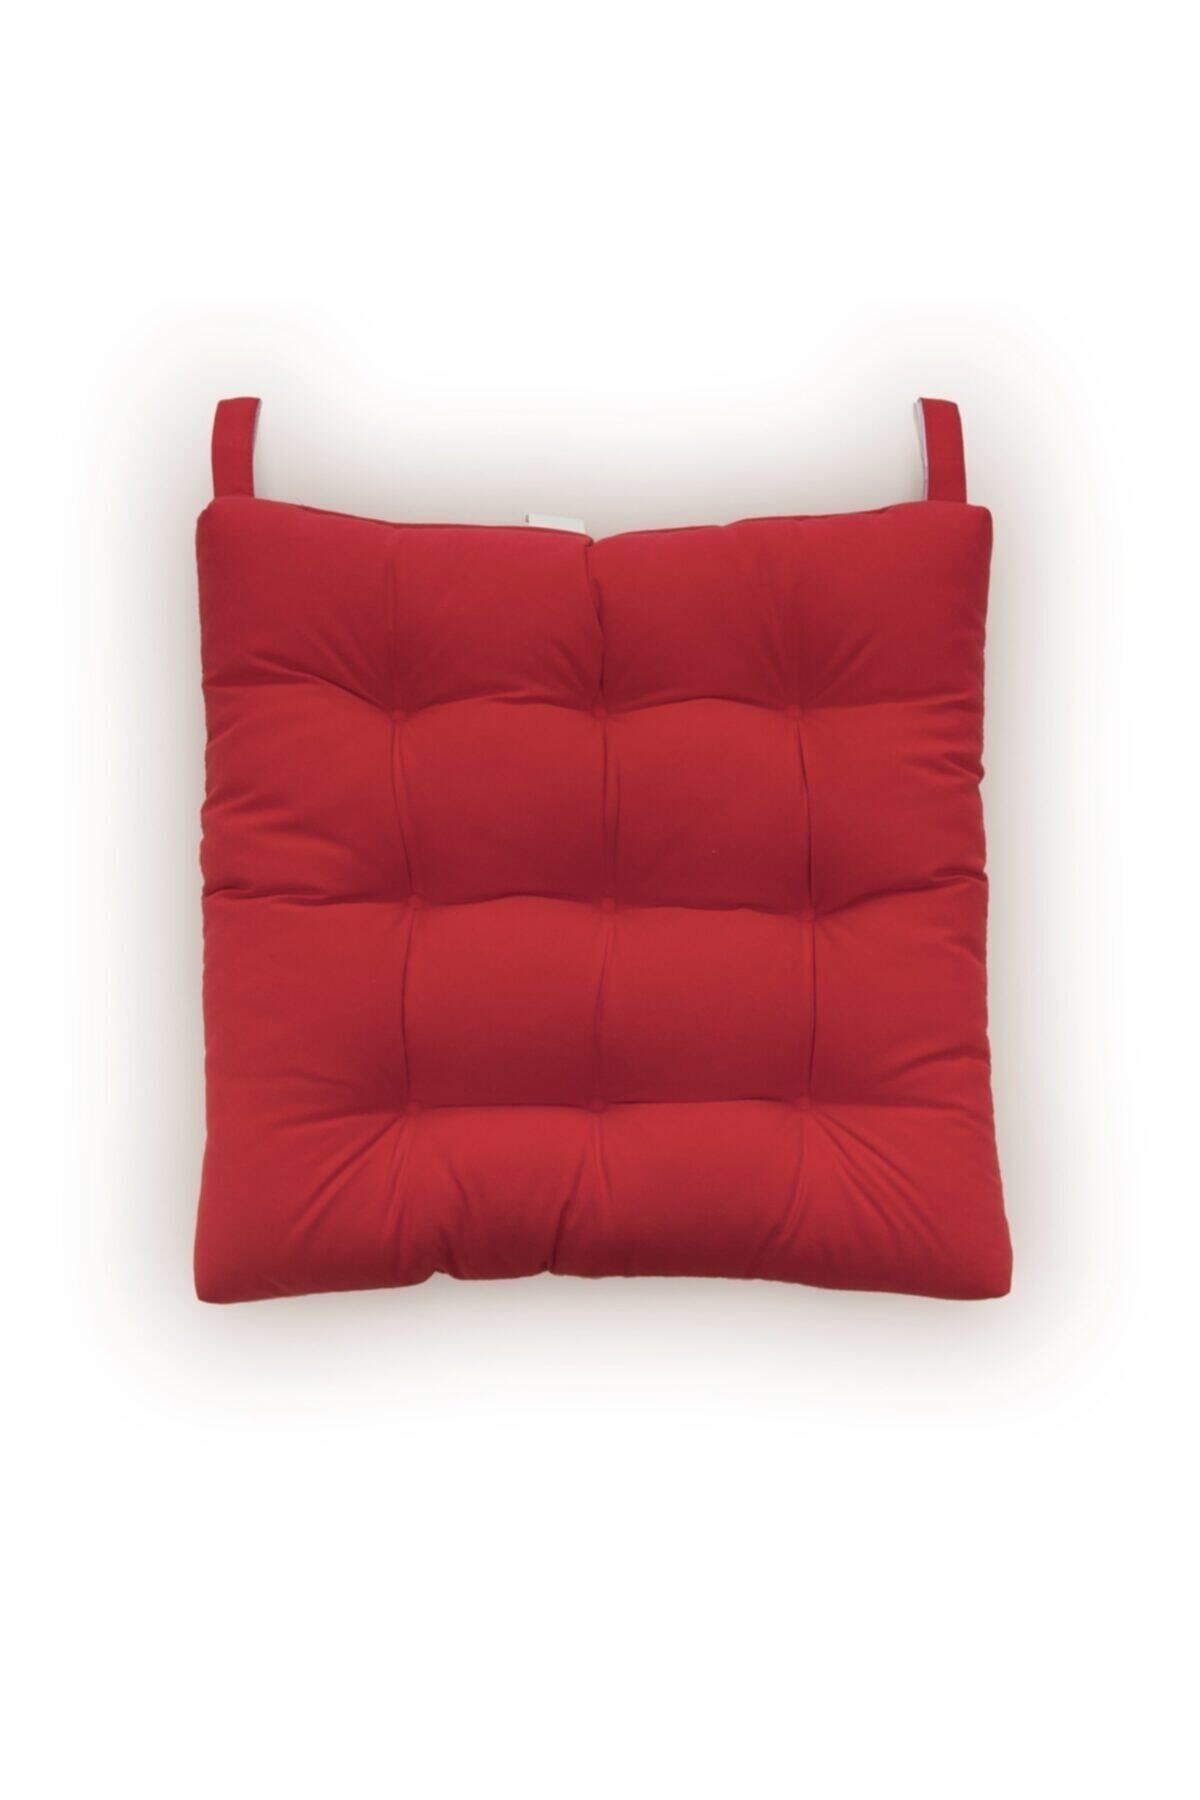 İris Home Art Pofidik Natura 43x43 Bağcıklı Rattan Sandalye Minderi Kırmızı